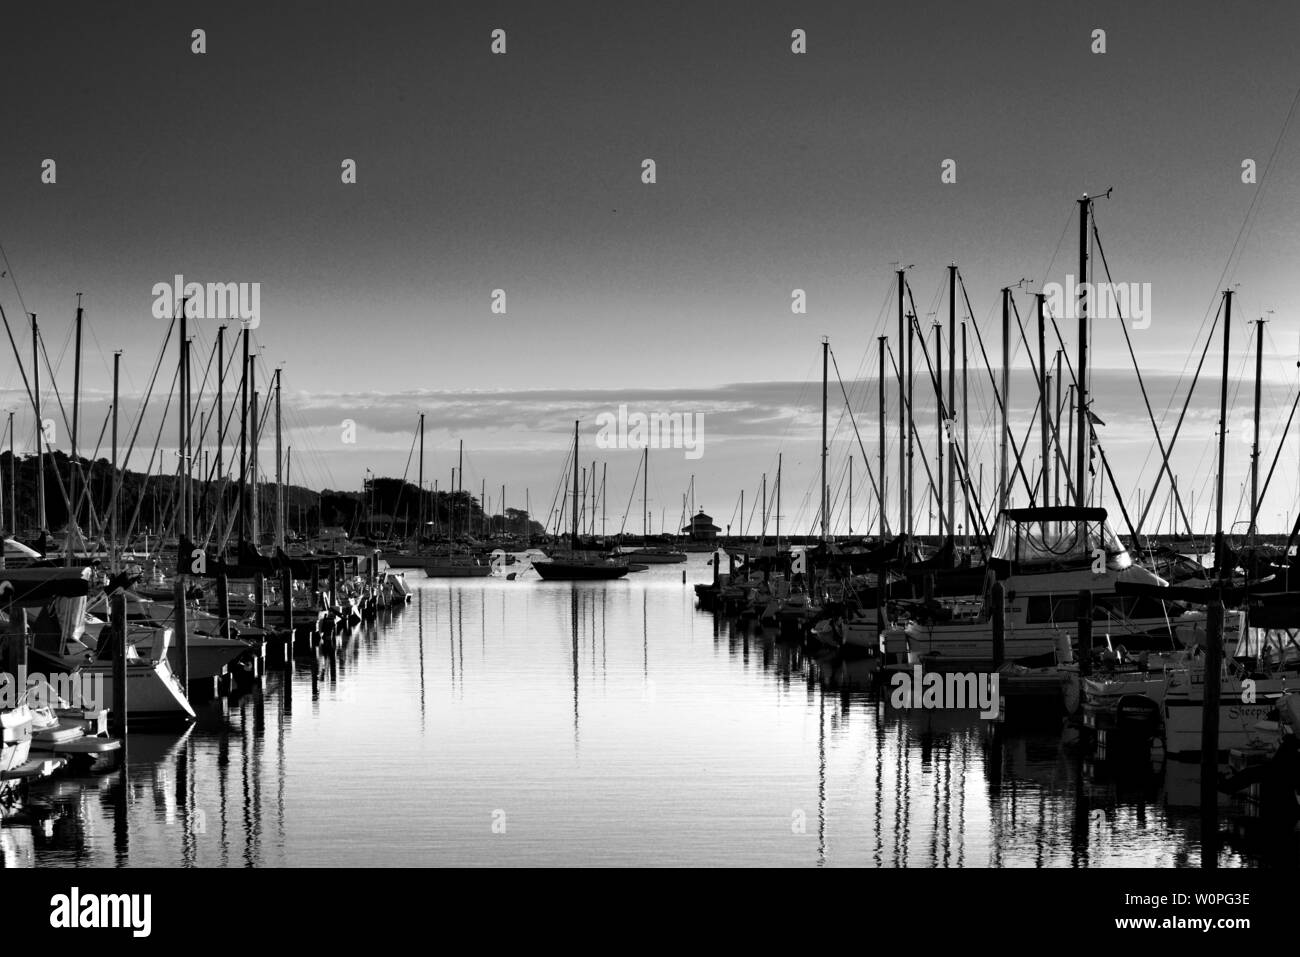 A quiet harbor. Stock Photo